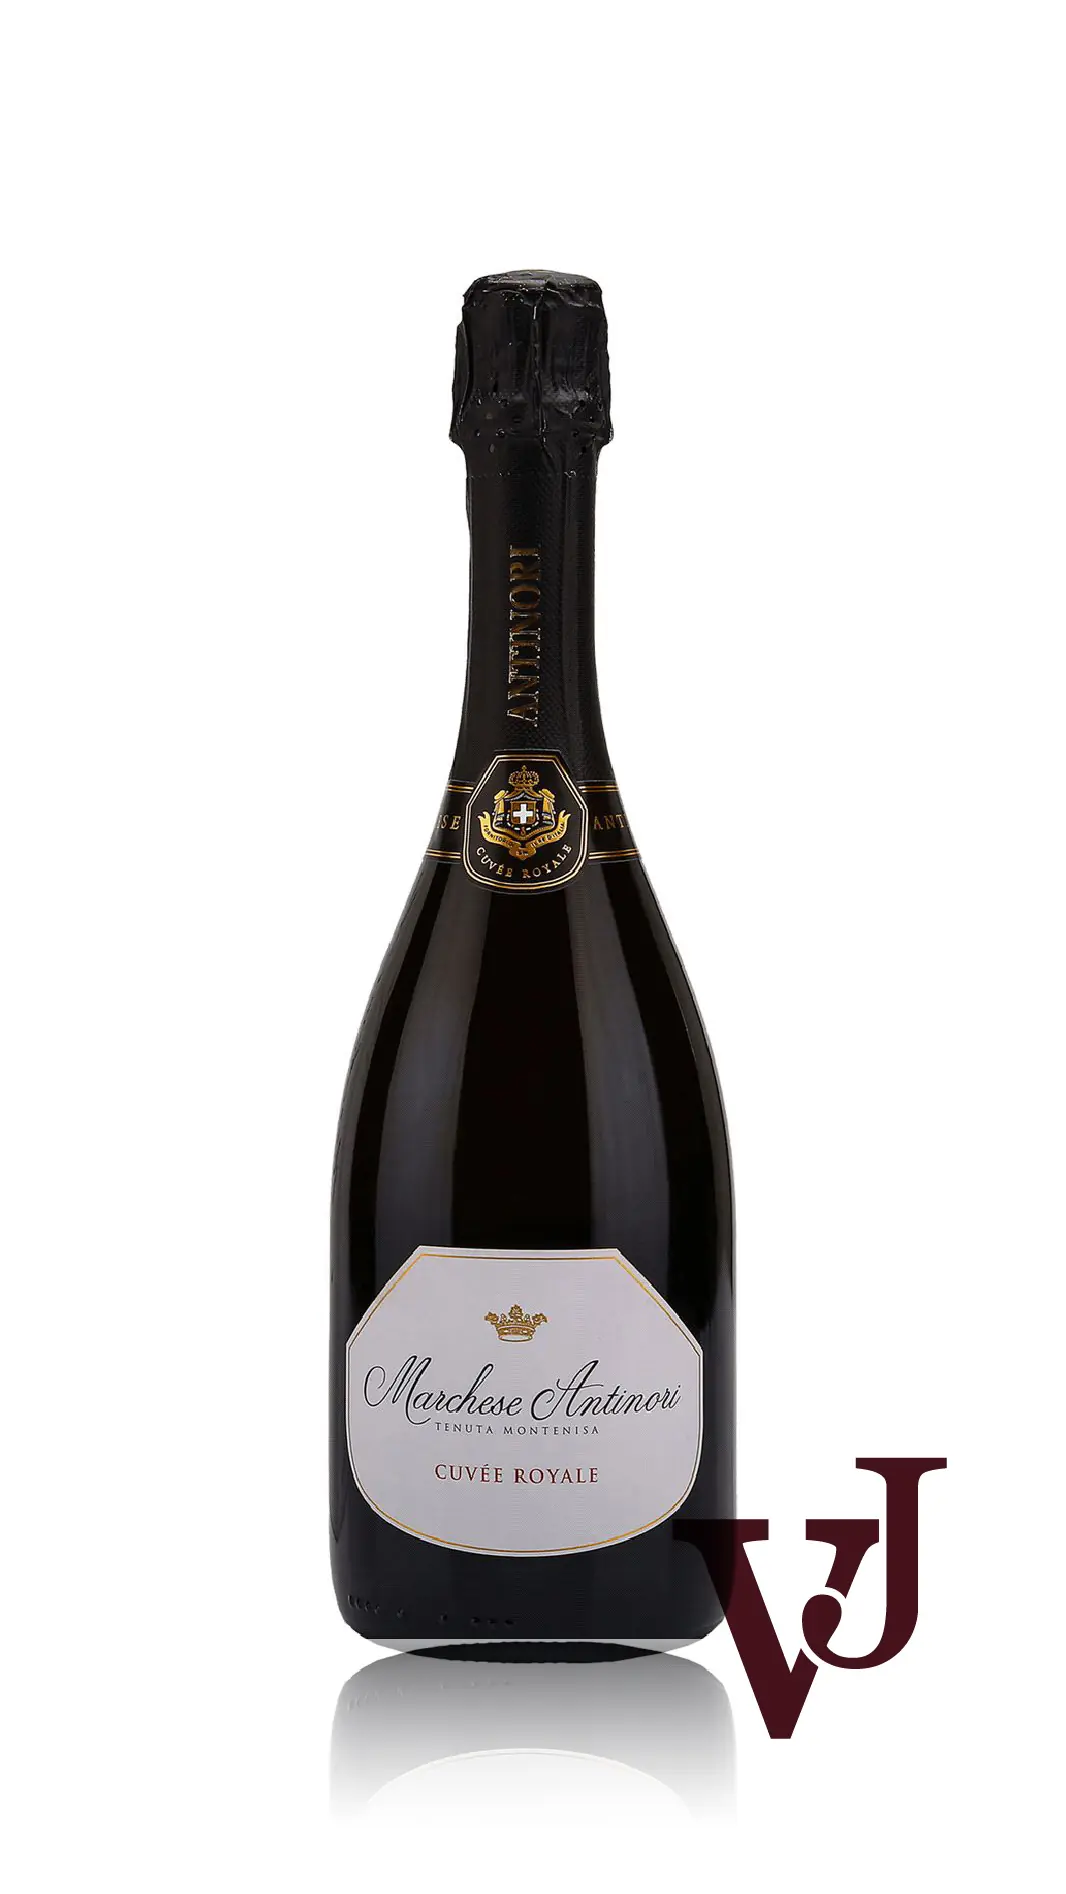 Mousserande Vin - Marchesi Antinori Franciacorta Cuvée Royale Brut artikel nummer 5100201 från producenten Marchesi Antinori från området Italien - Vinjournalen.se